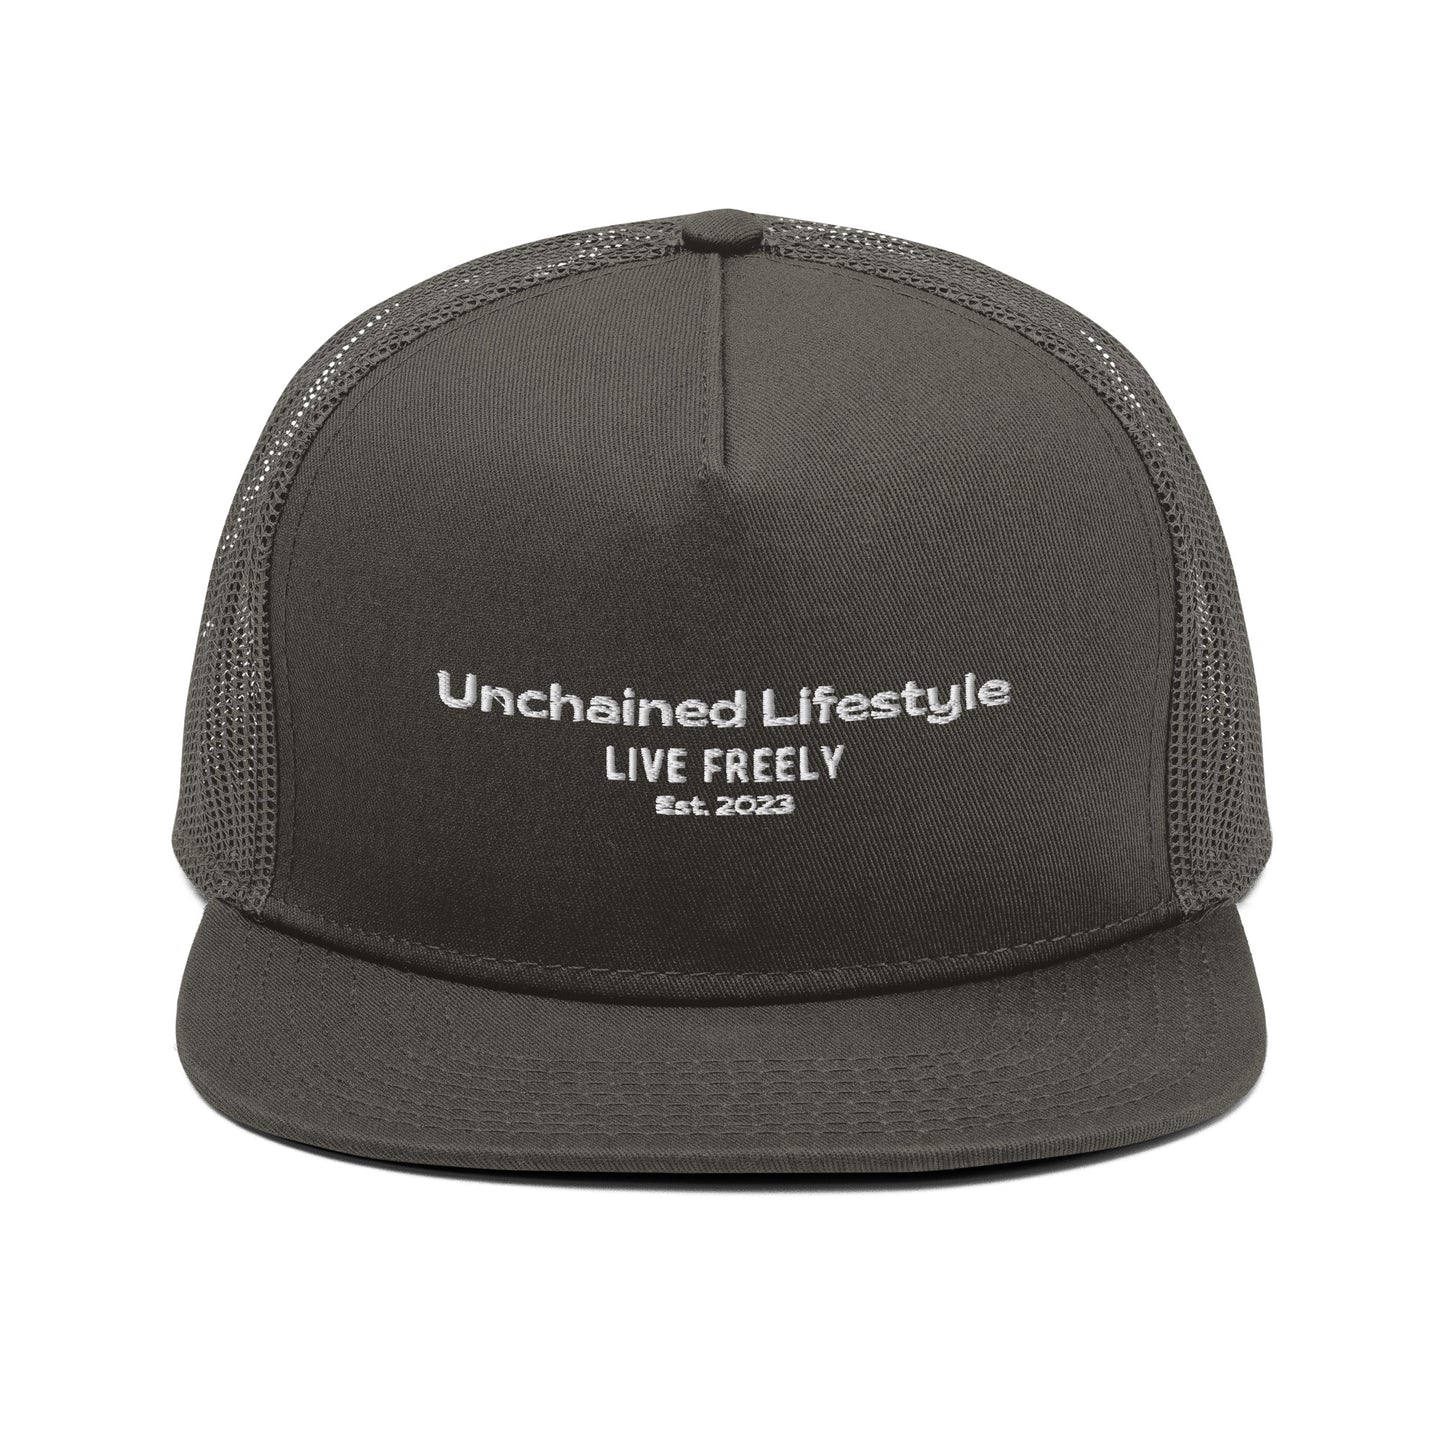 unchained lifestyle Snapback